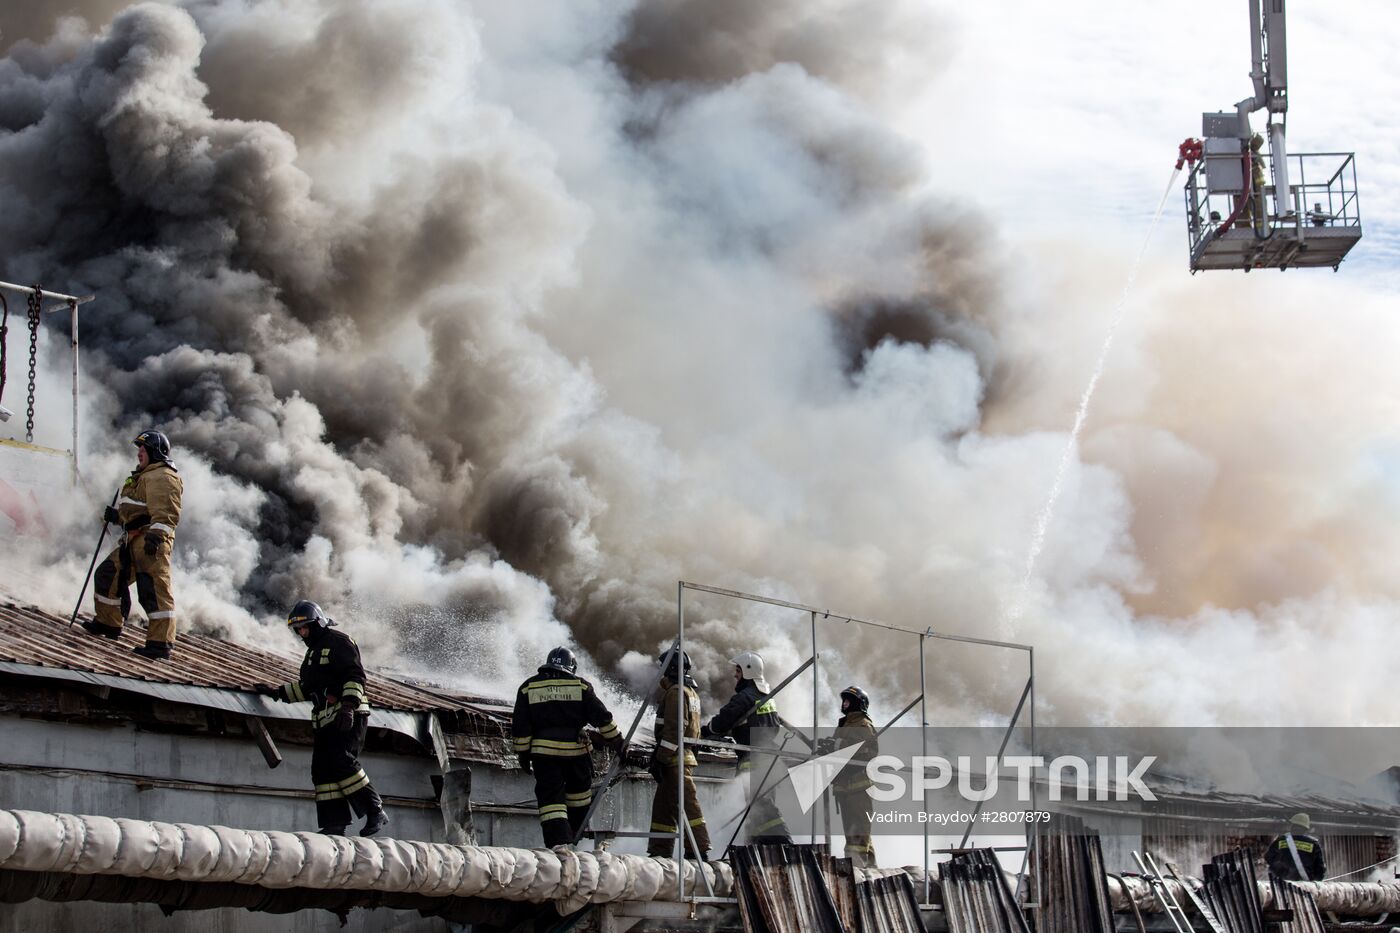 Fireworks storage on fire in Ufa